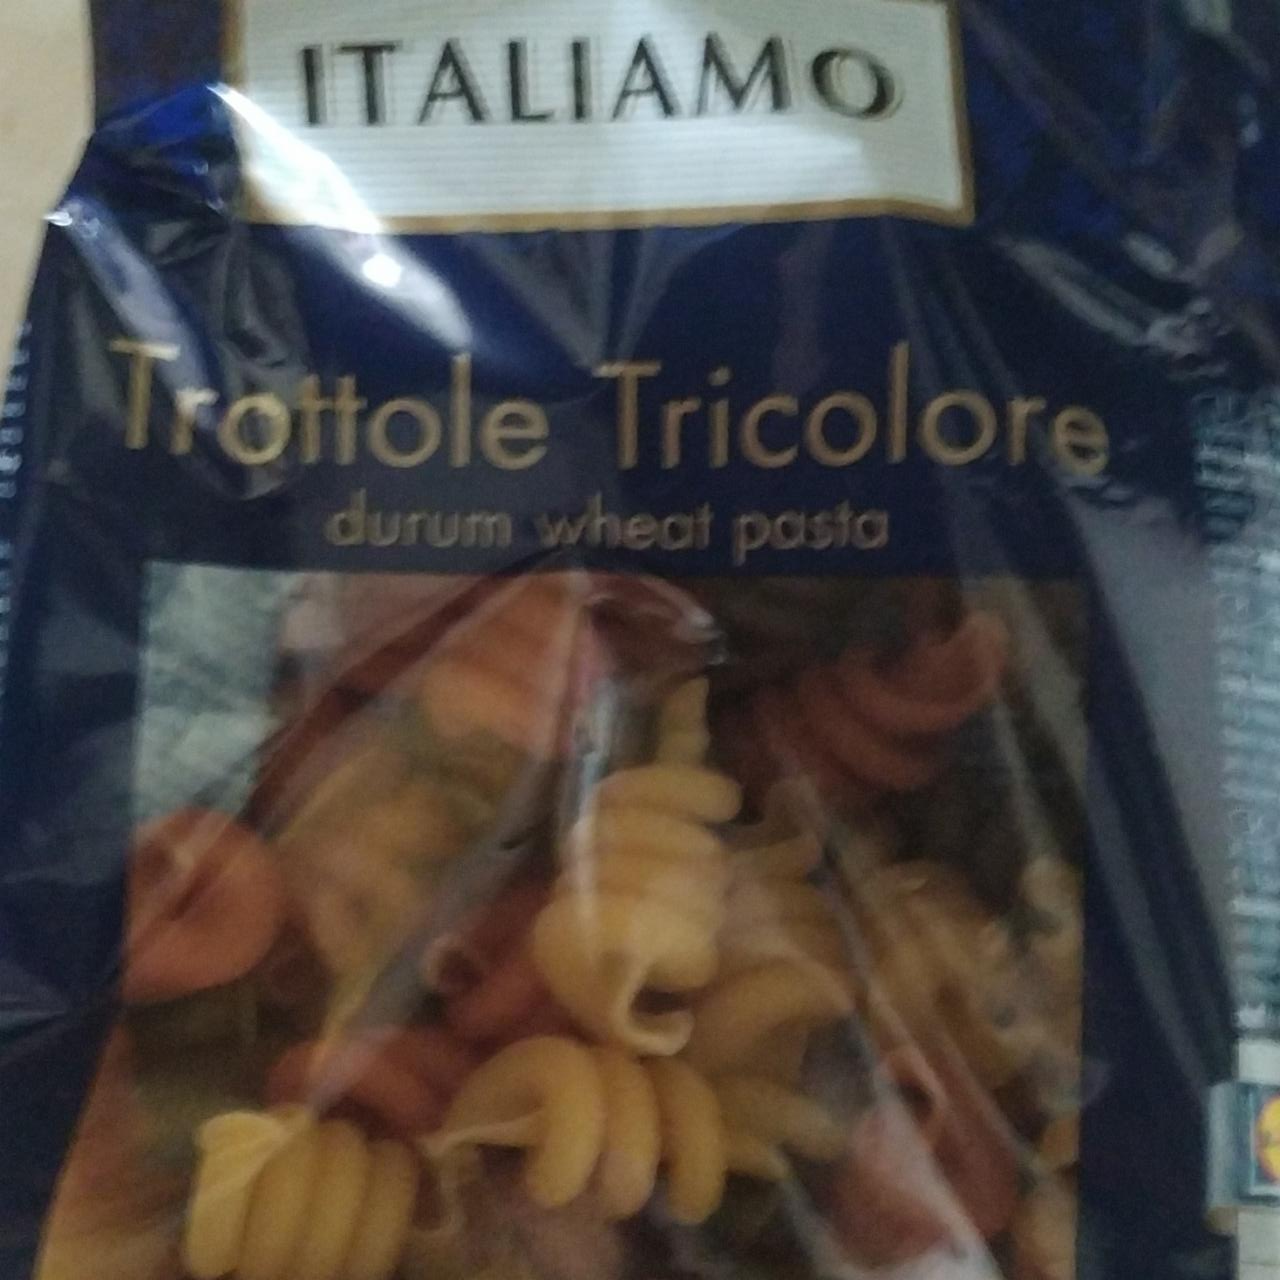 Képek - Trottole tricolore durum wheat pasta Italiamo